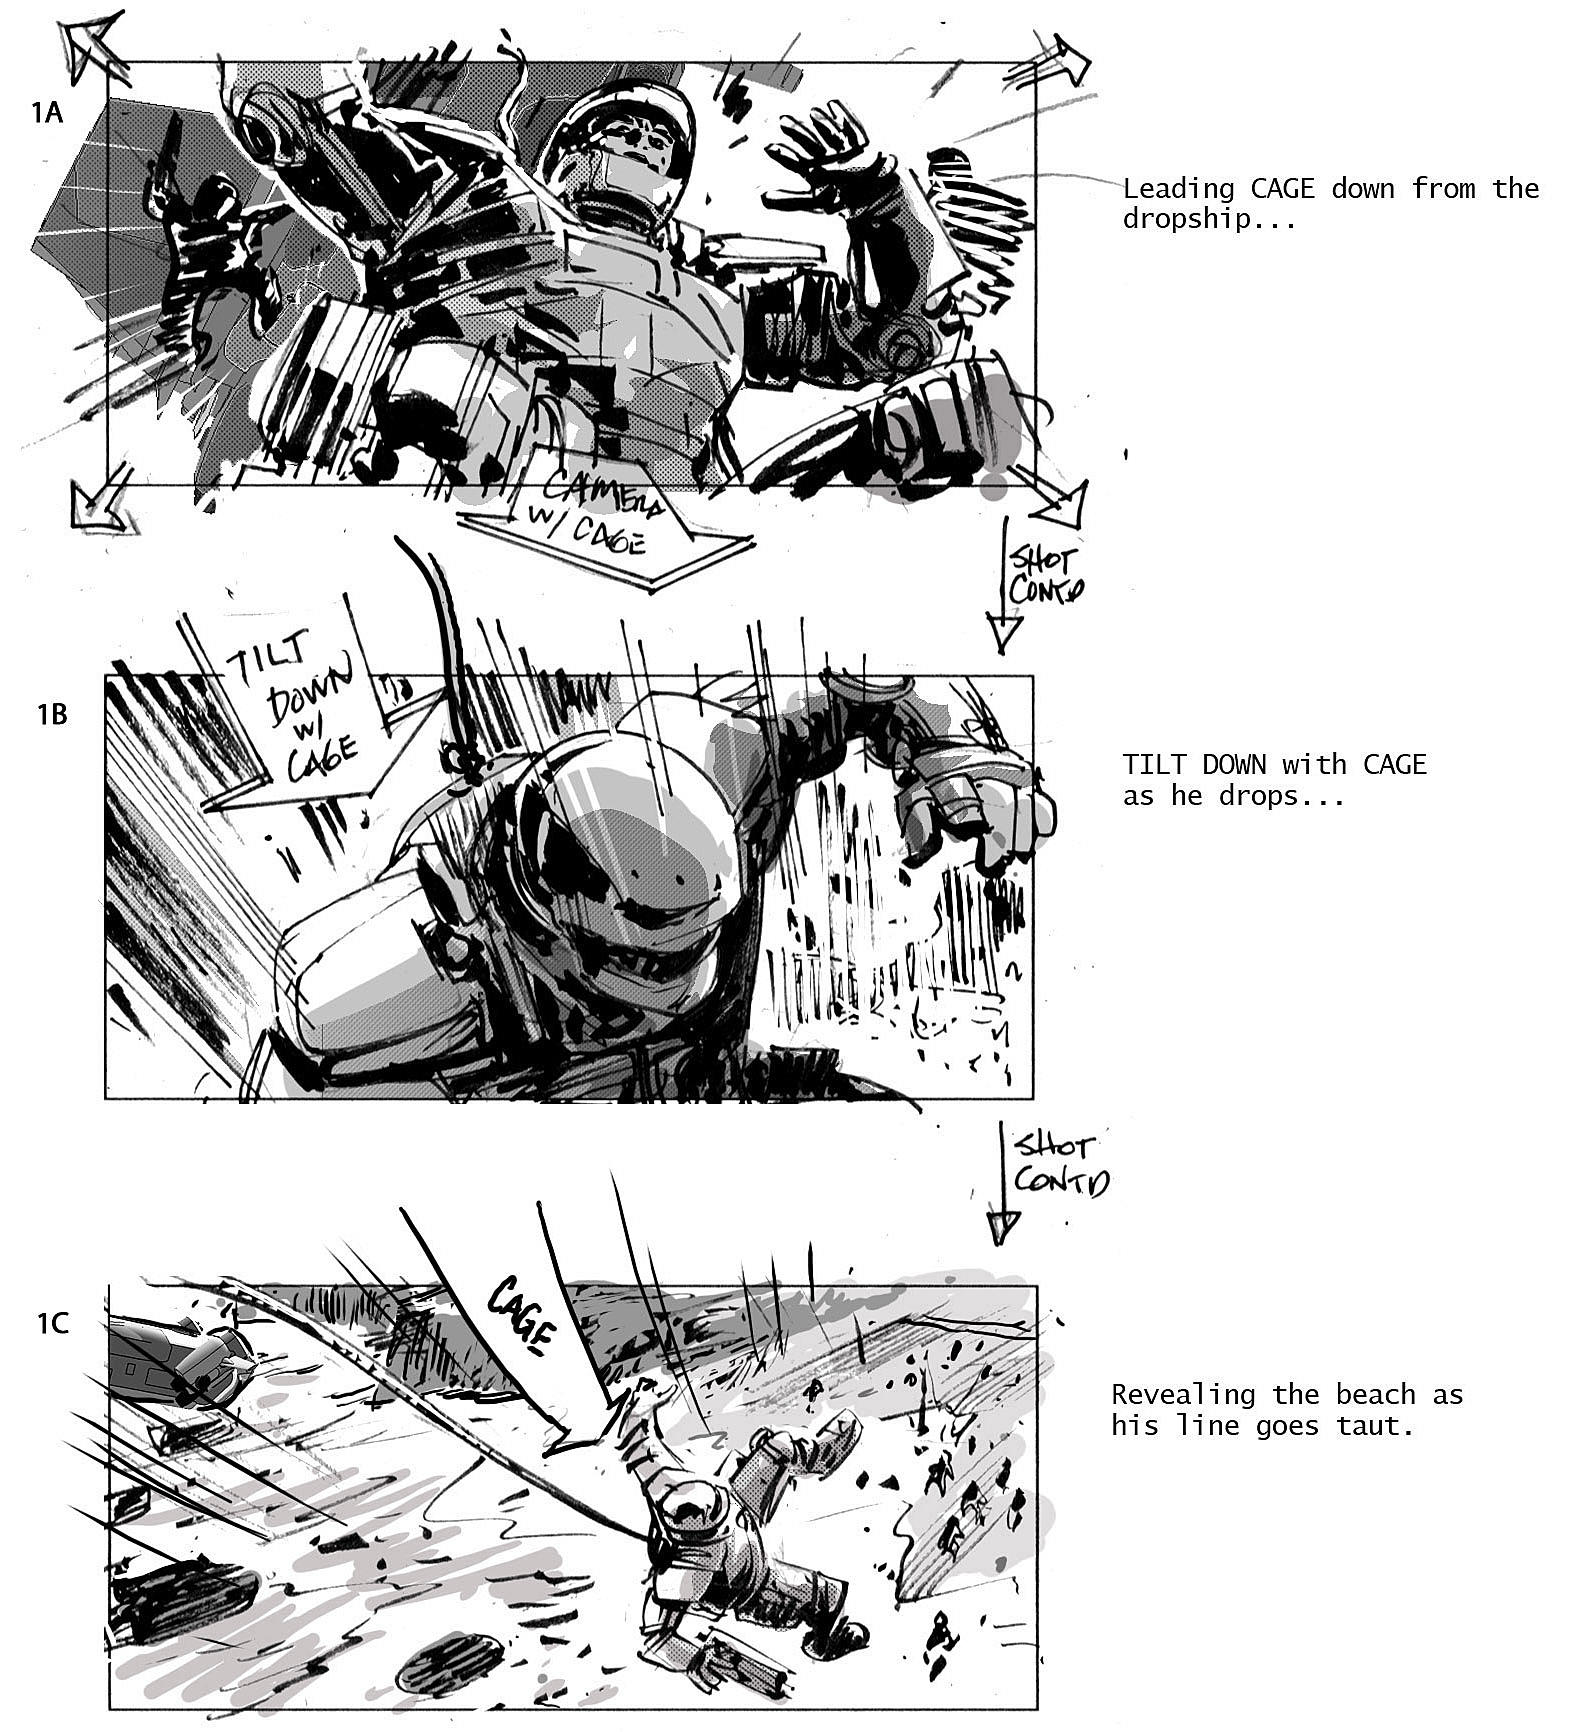 Storyboard - How To Draw Manga - Too Corporation